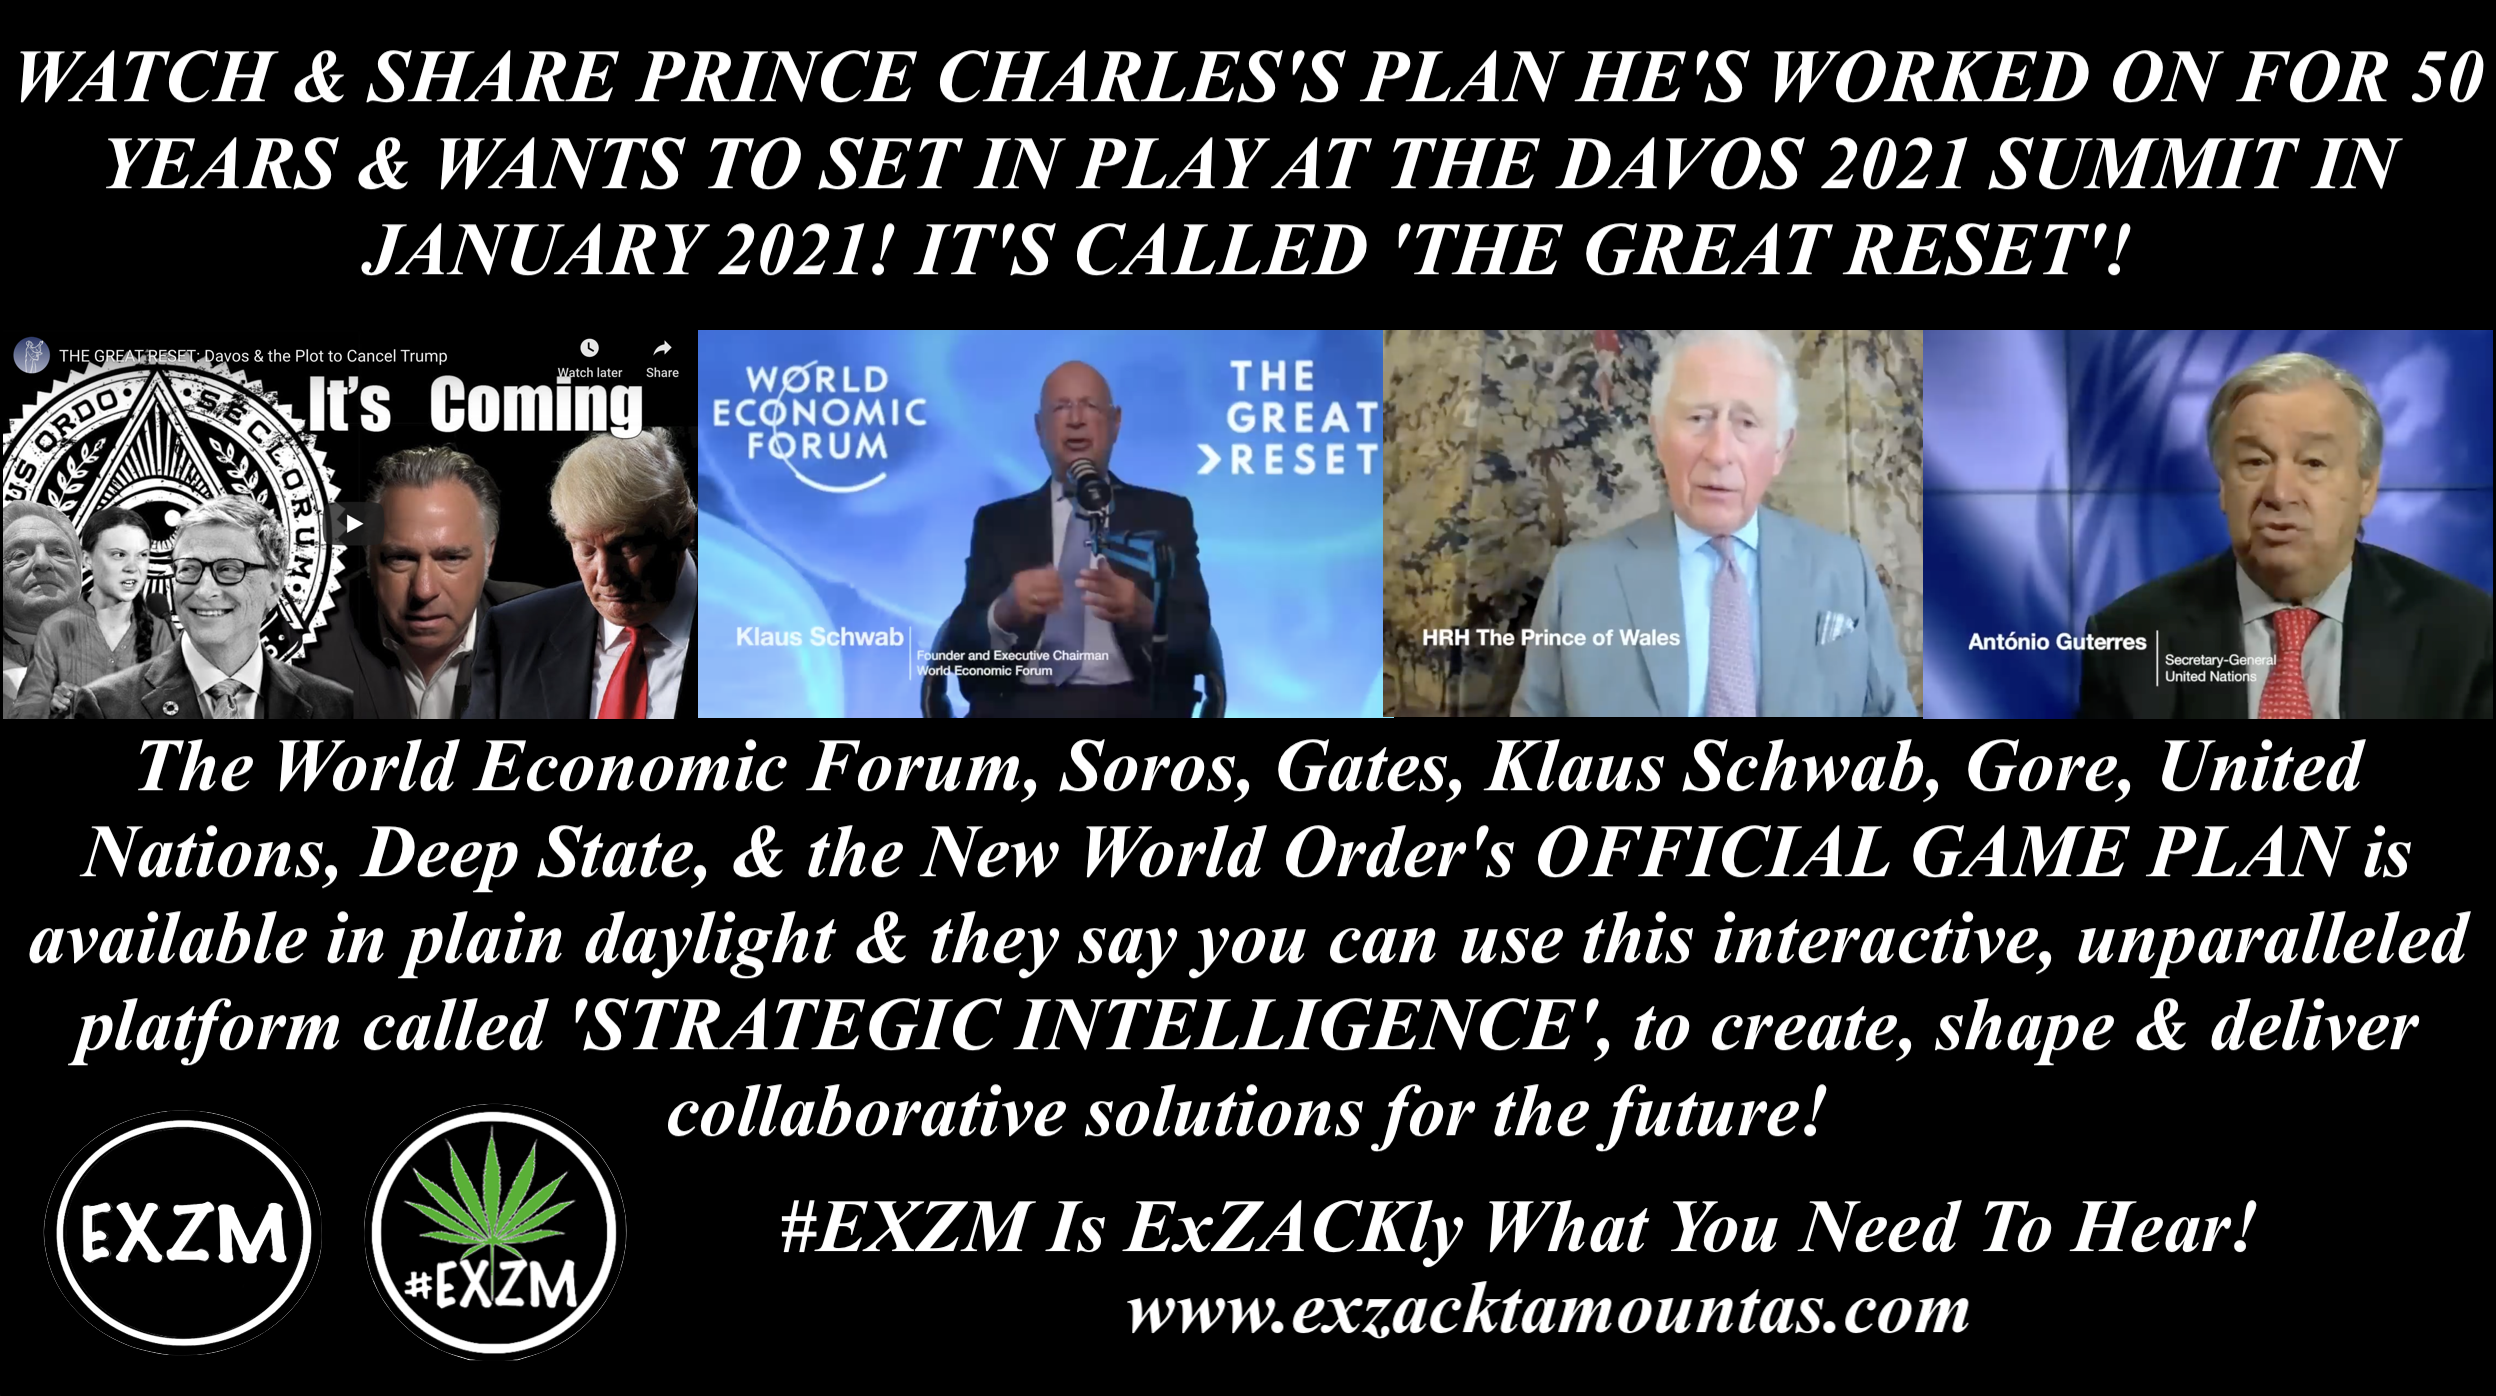 Prince Charles The Great Reset World Economic Forum Michael J Matt Strategic Intelligence EXZM August 18th 2020